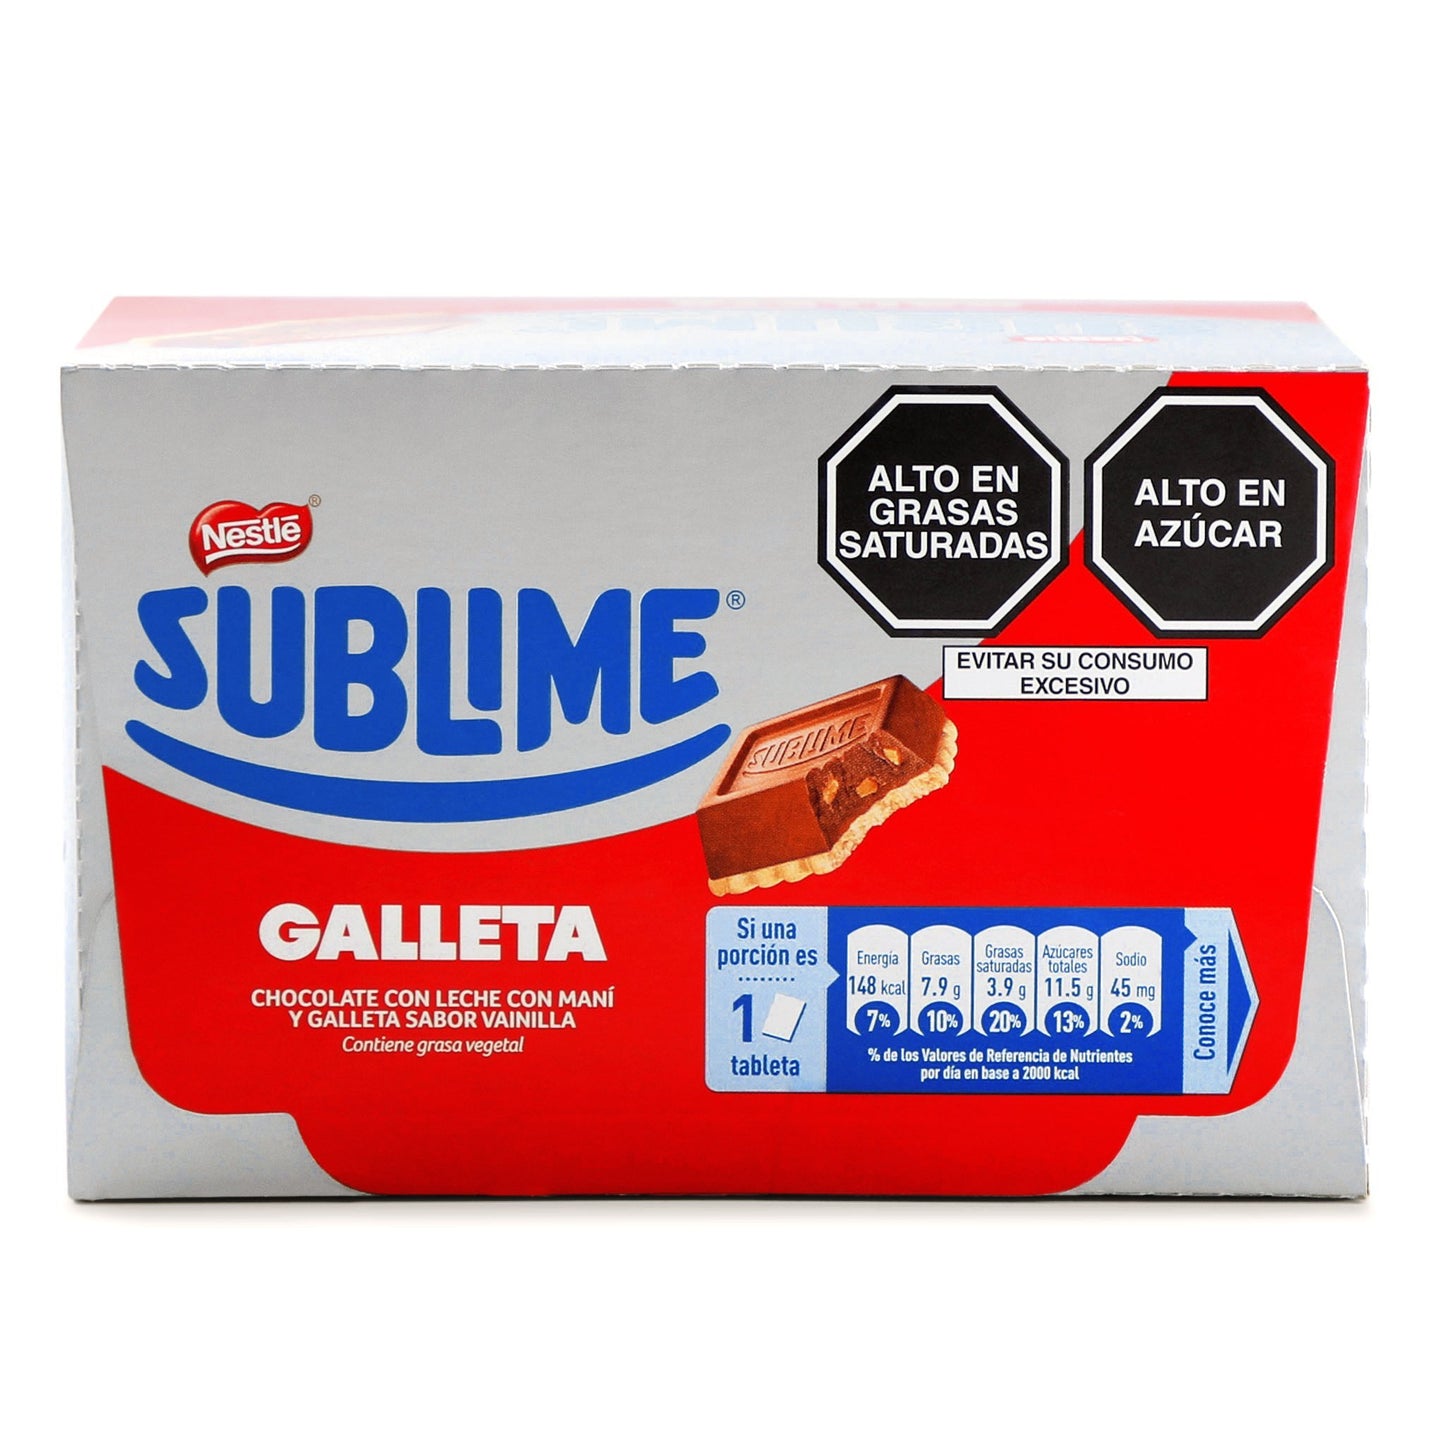 Sublime Chocolate Galleta  24 uni x 28 gr. c/u